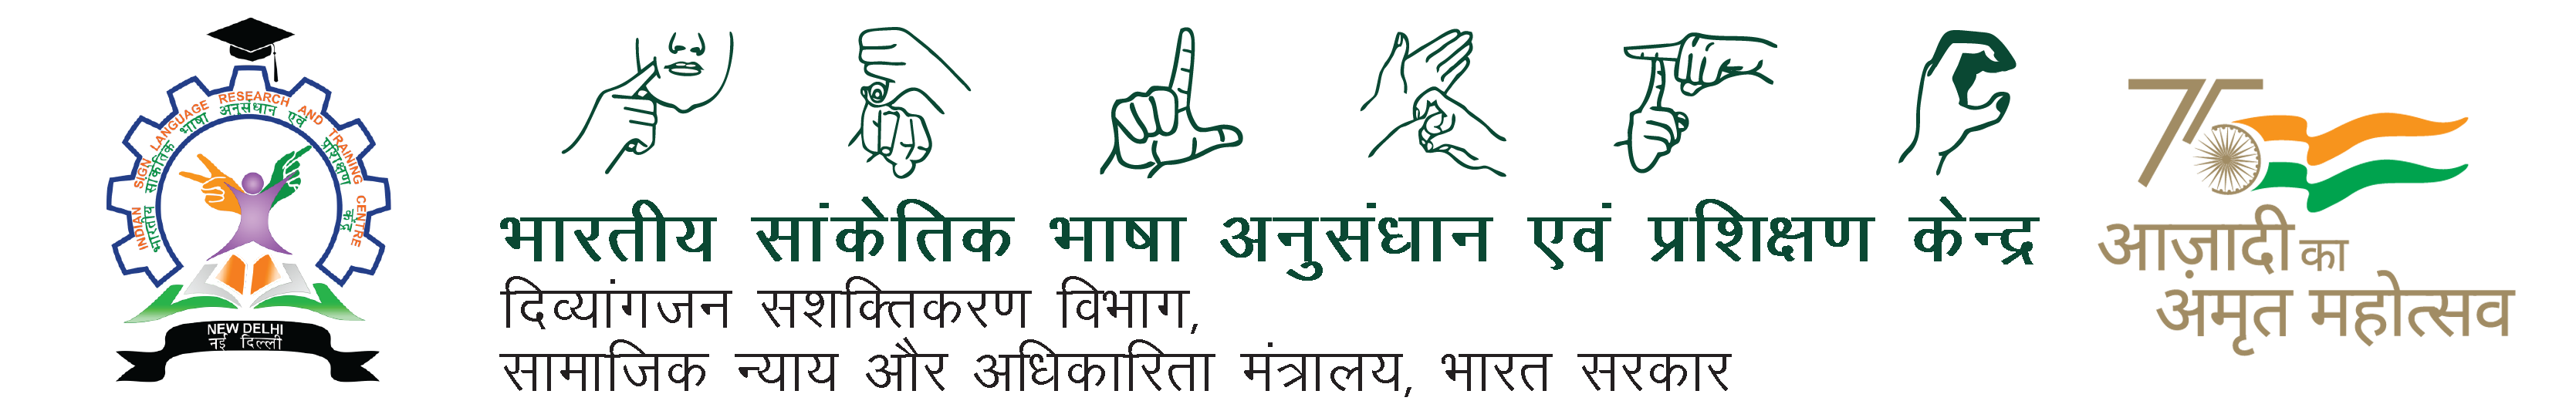 ISLRTC-hindi-Logo